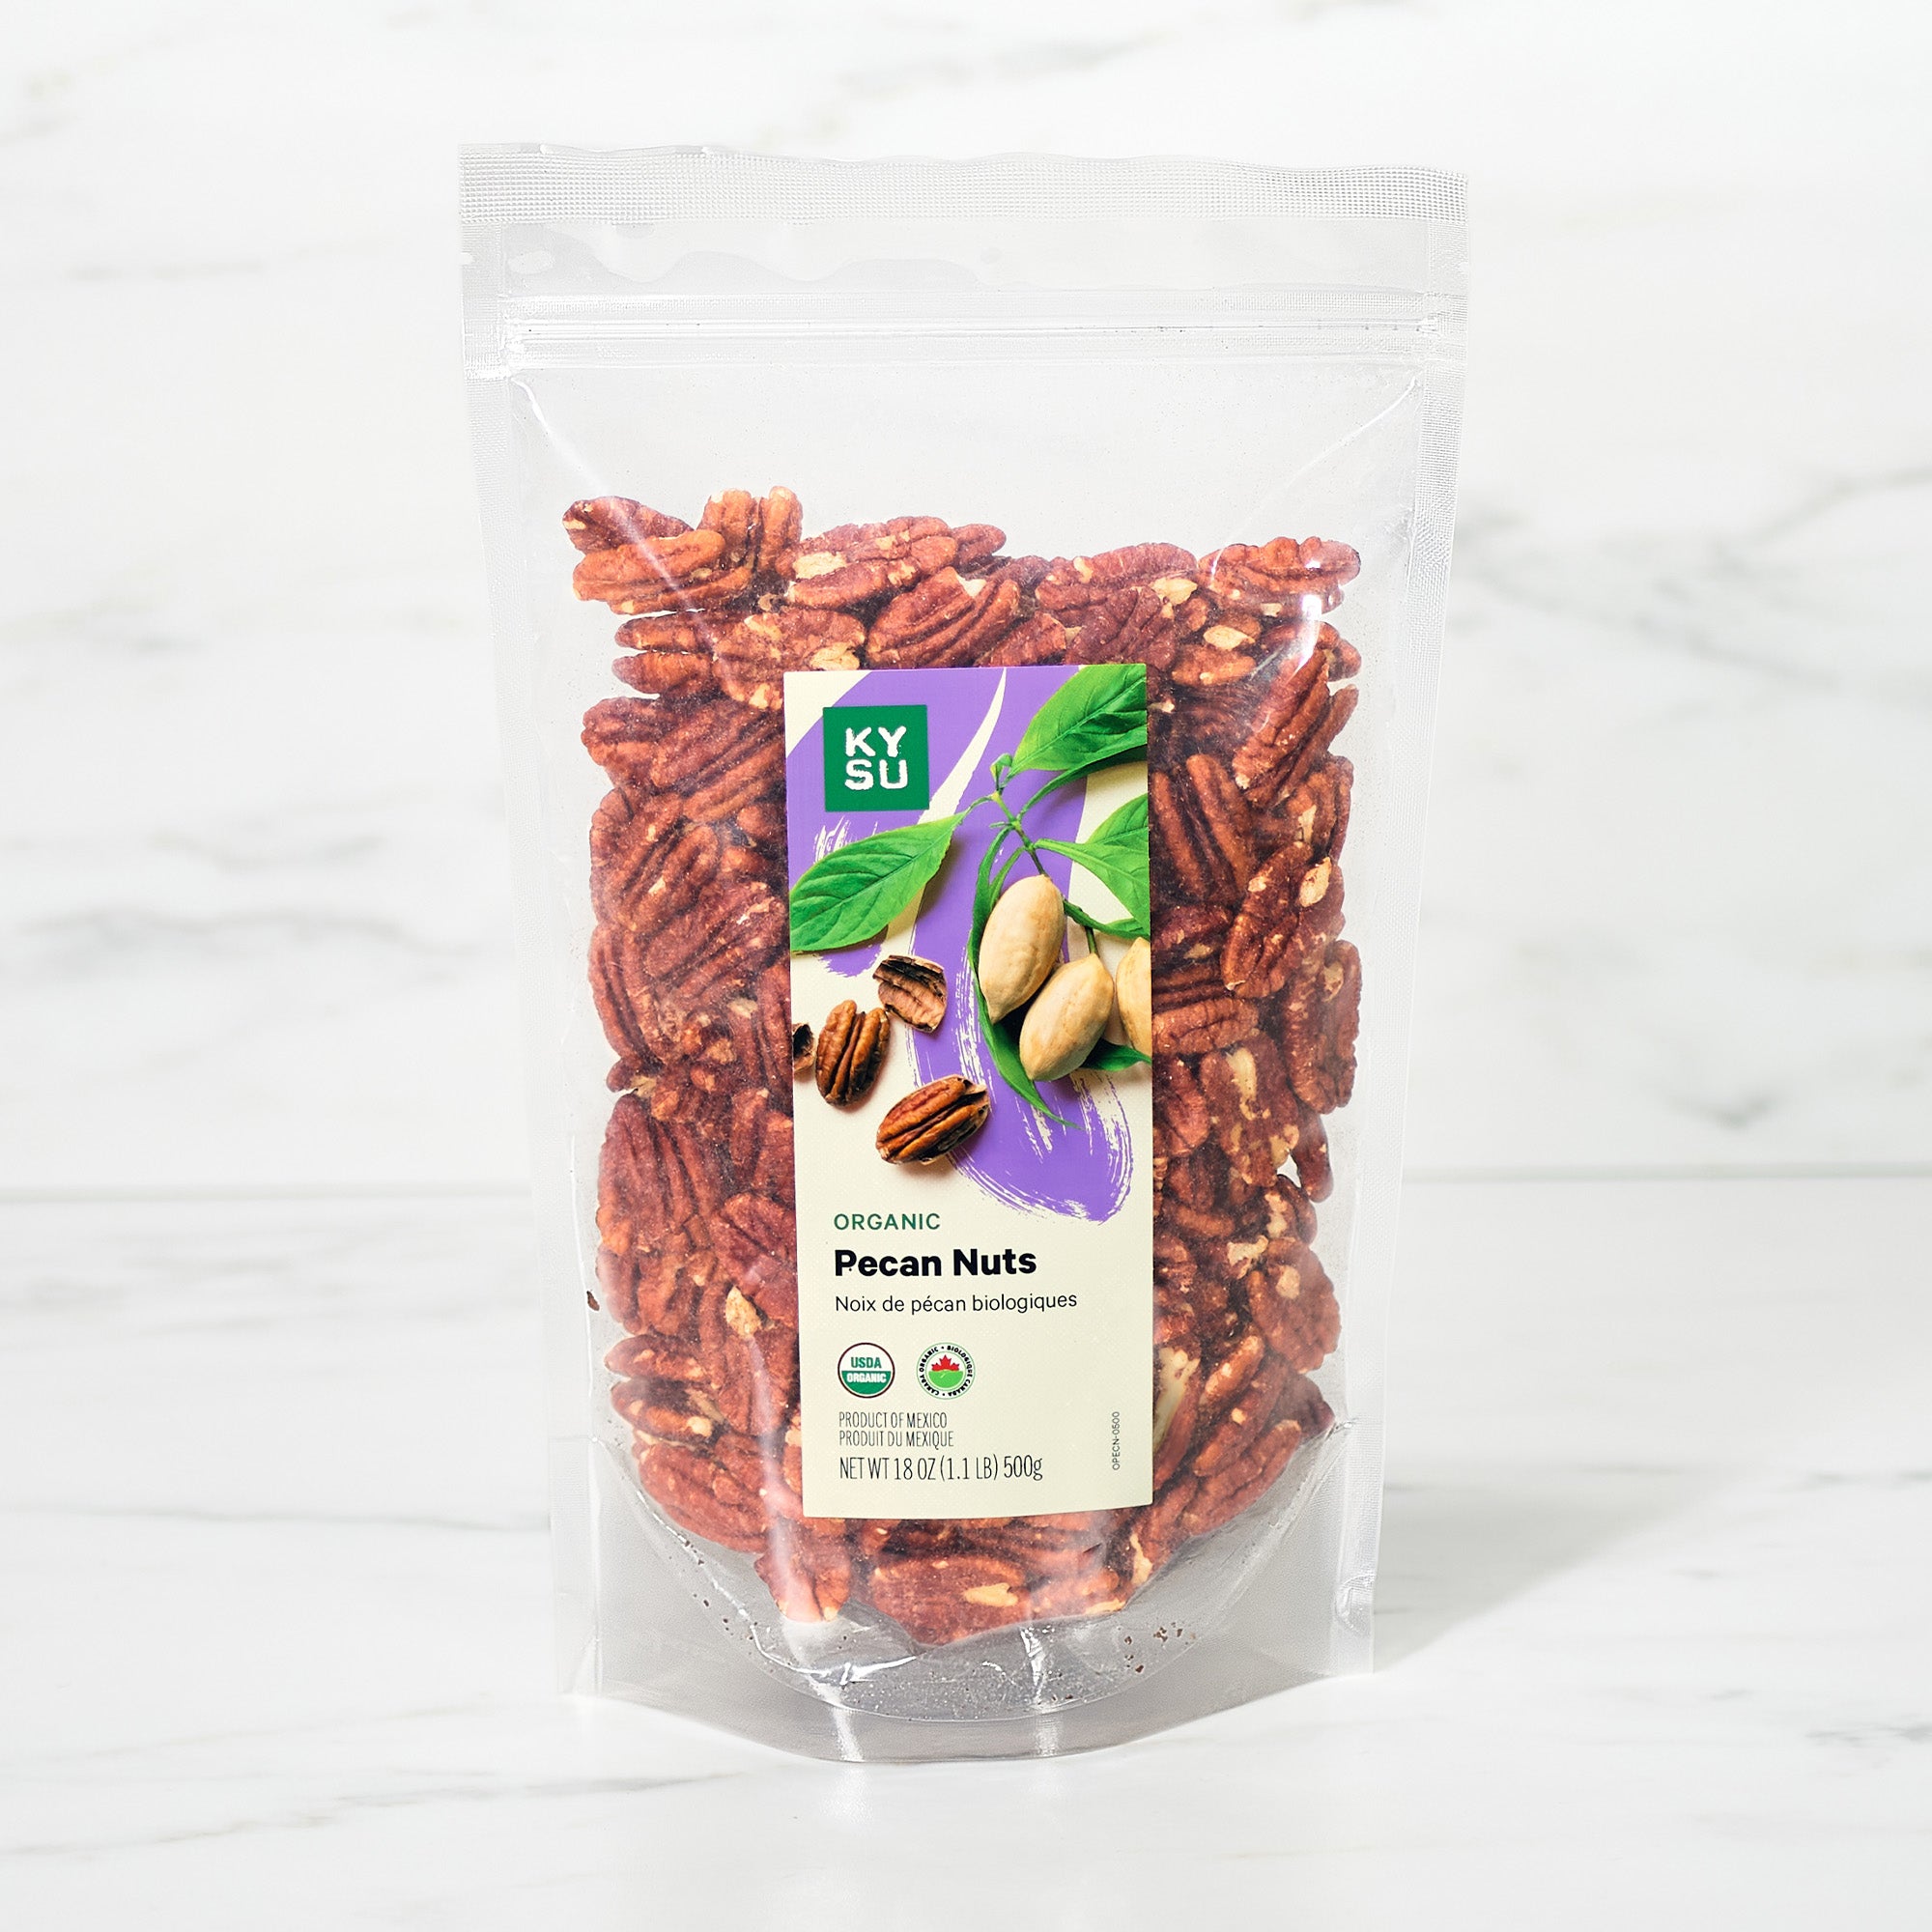 Organic pecan nuts, 1.1 lb